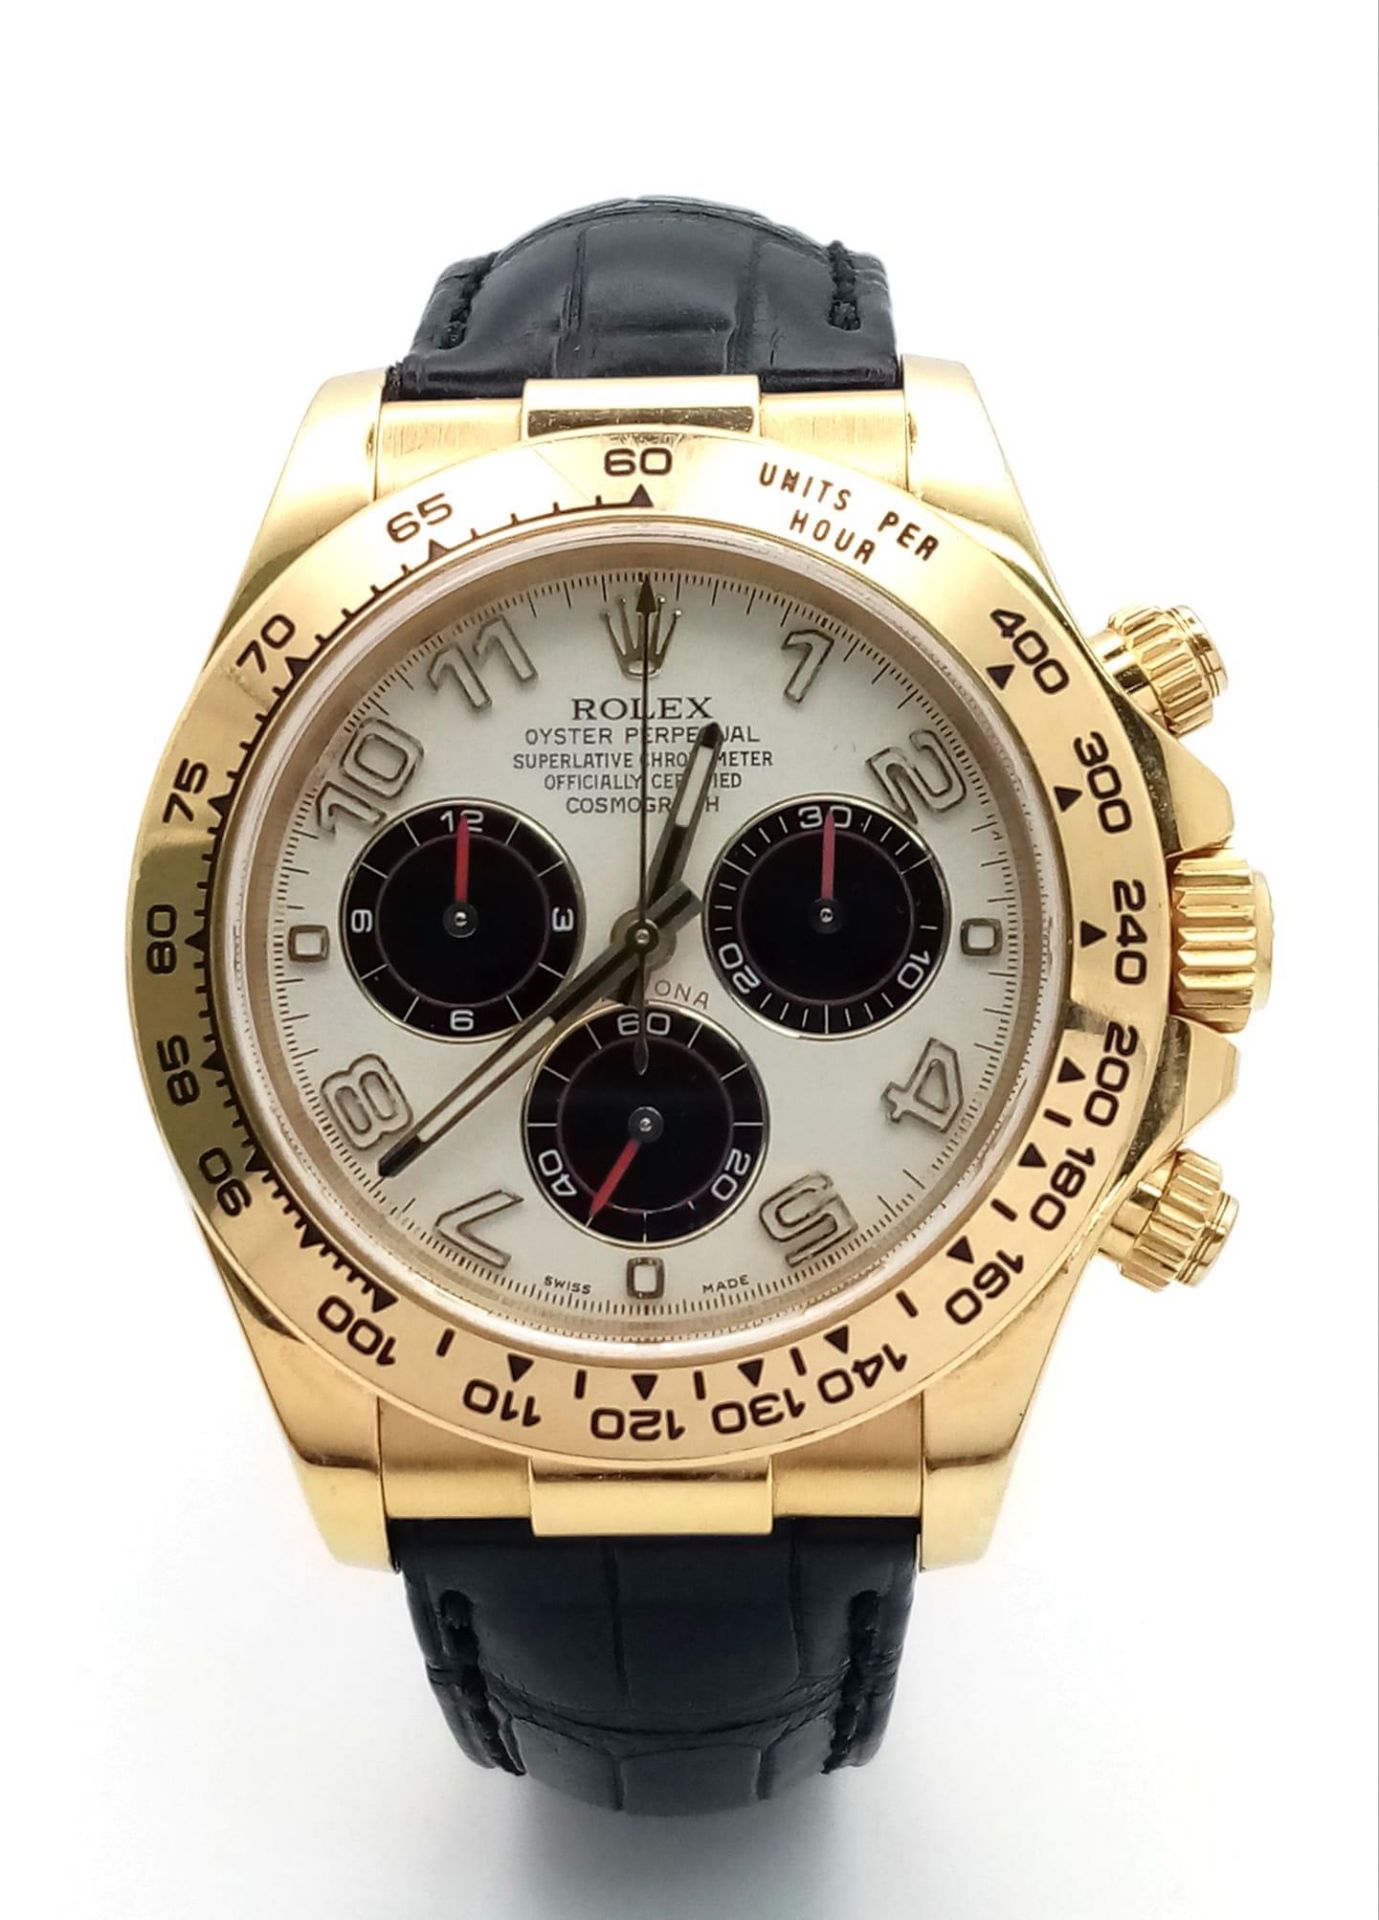 A Rolex Daytona Chronograph Panda 18K Gold Gents Watch. Black leather strap with Rolex gold clasp.